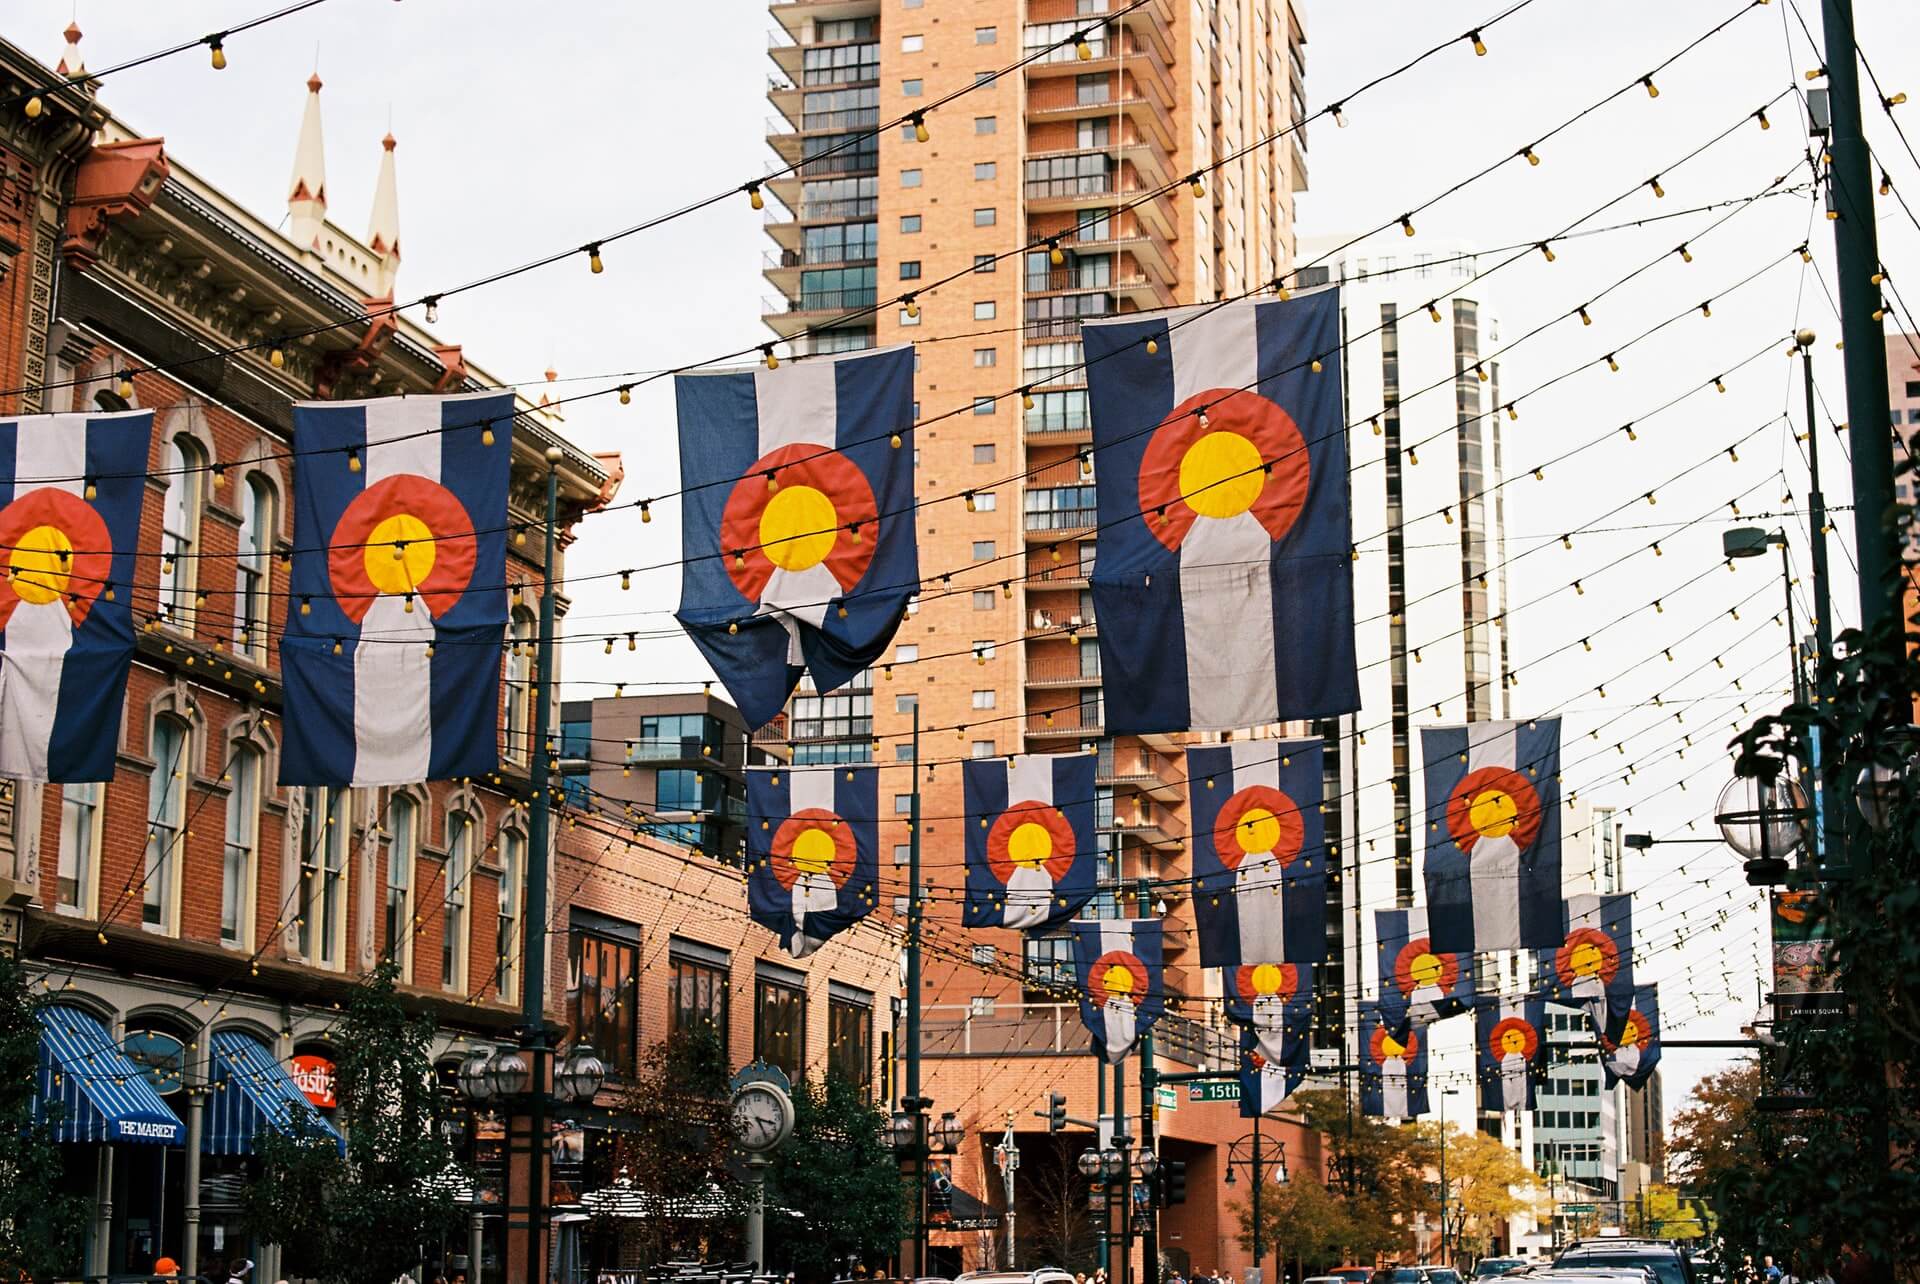 colorado flags hanging in denver street